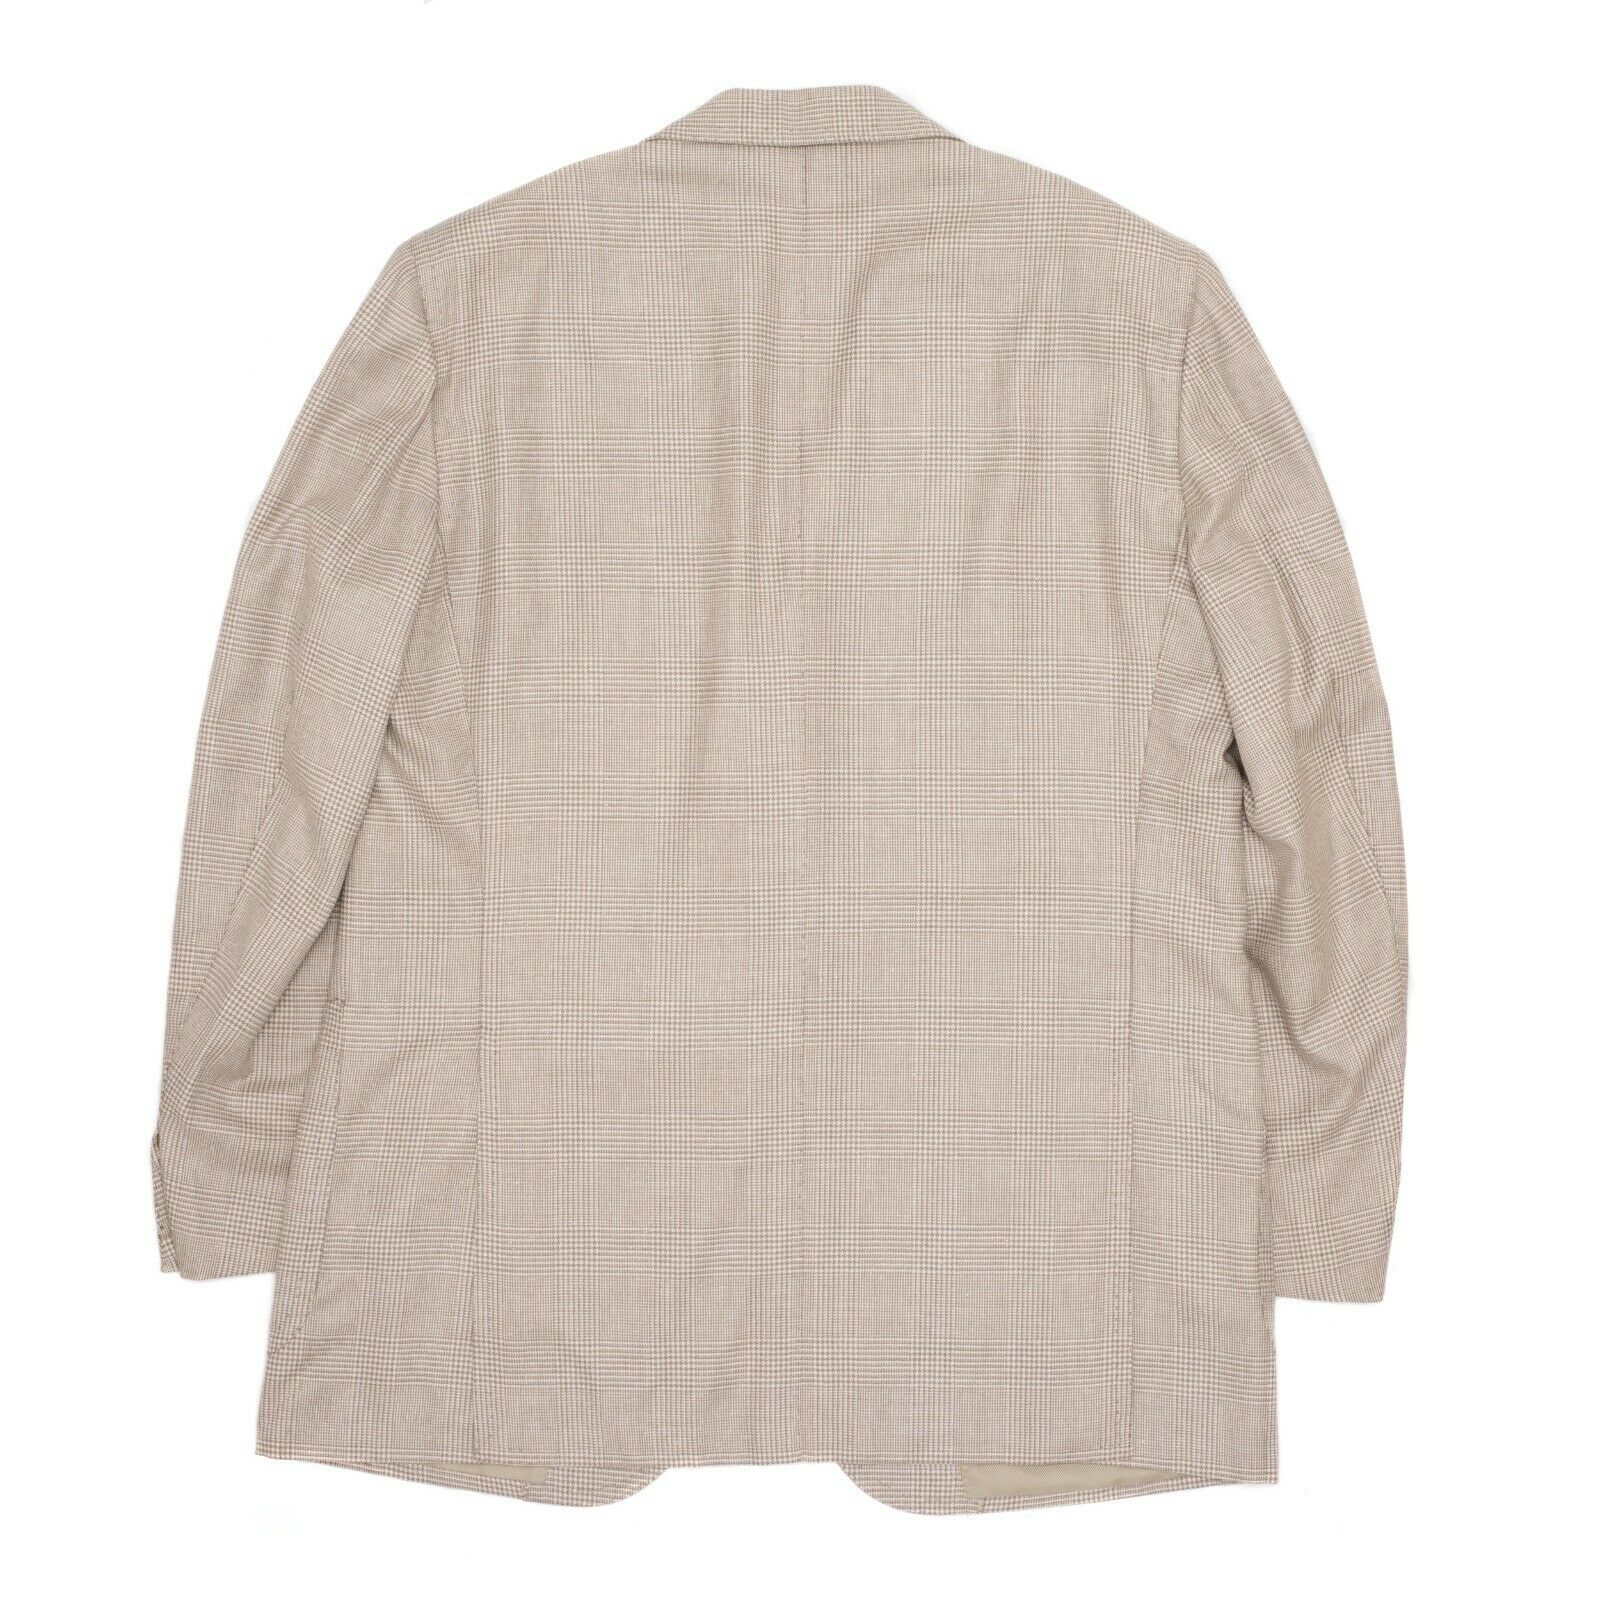 Cesare ATTOLINI Handmade Glen Plaid Silk-Wool Super 150' Jacket 58 NEW US 48